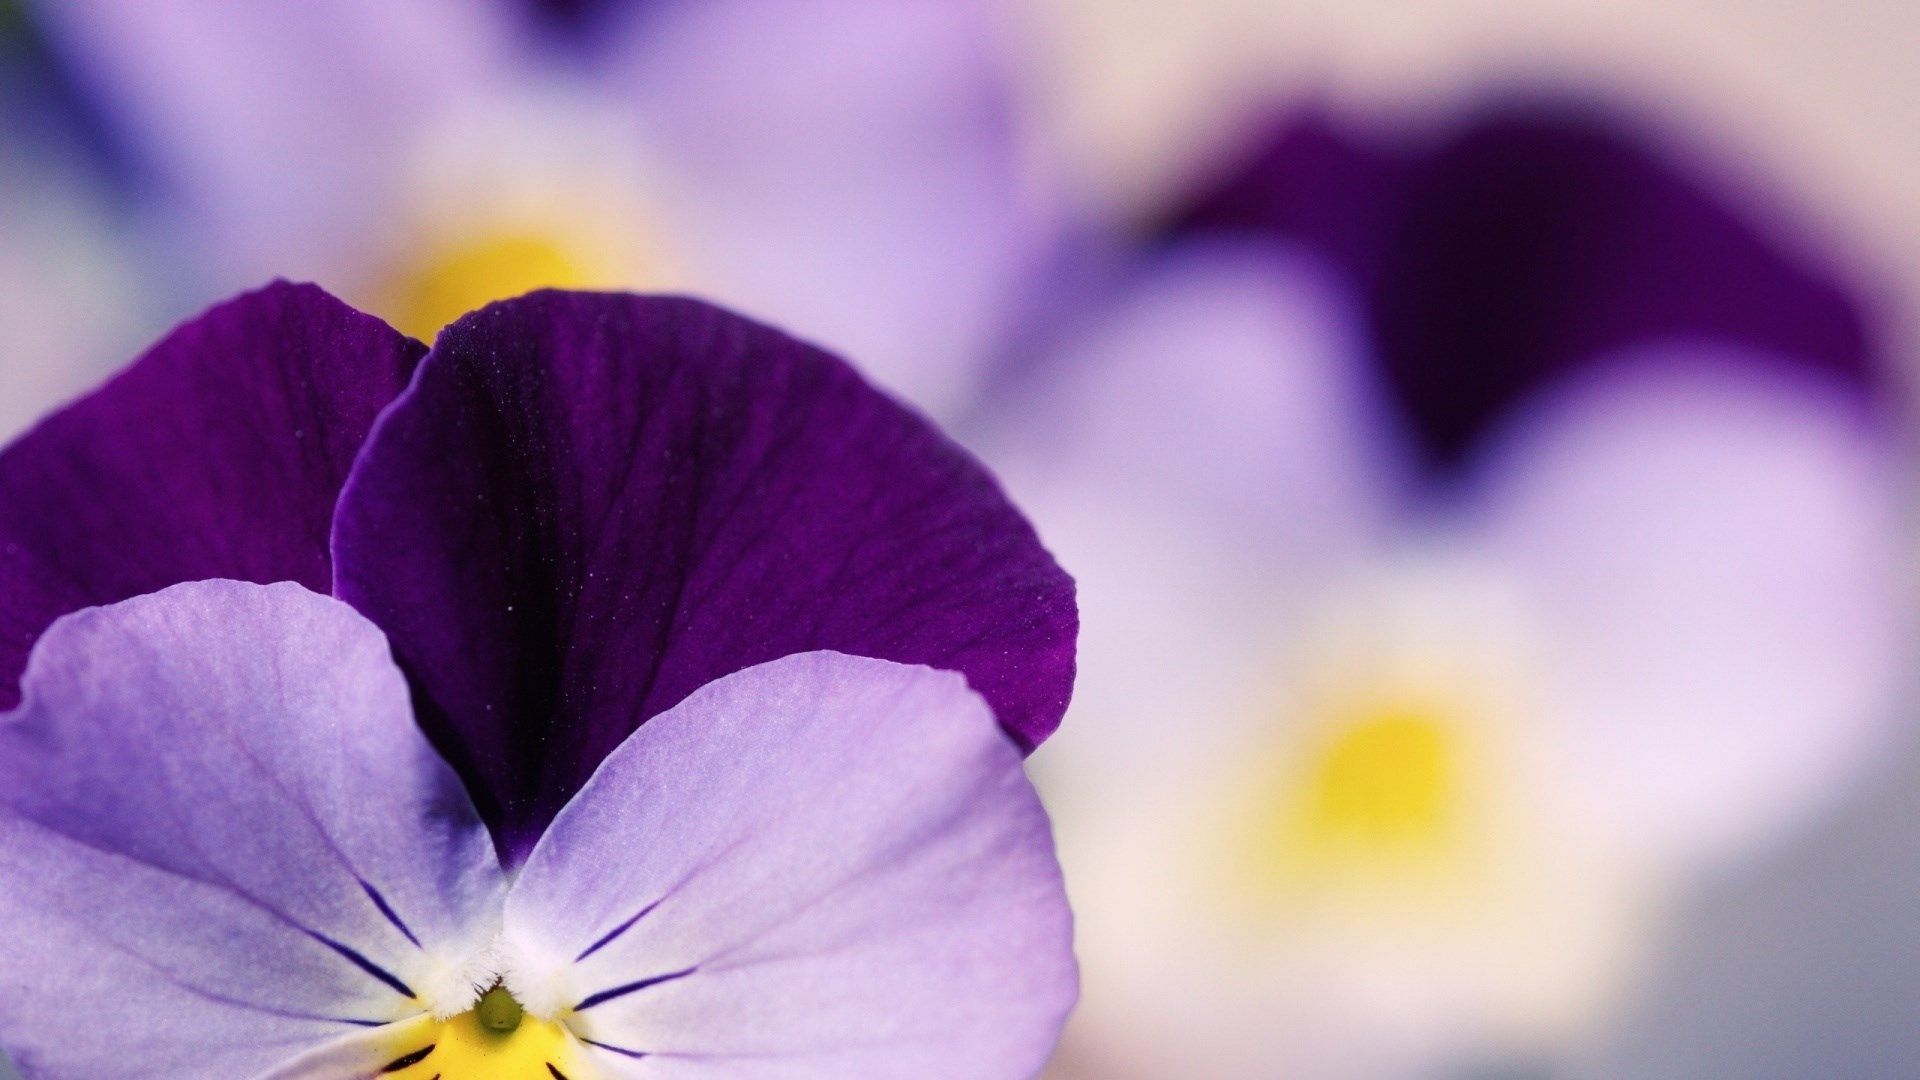 Viola Tricolor Pansy Flower Close-Up wallpaper | 1920x1080 | #23697